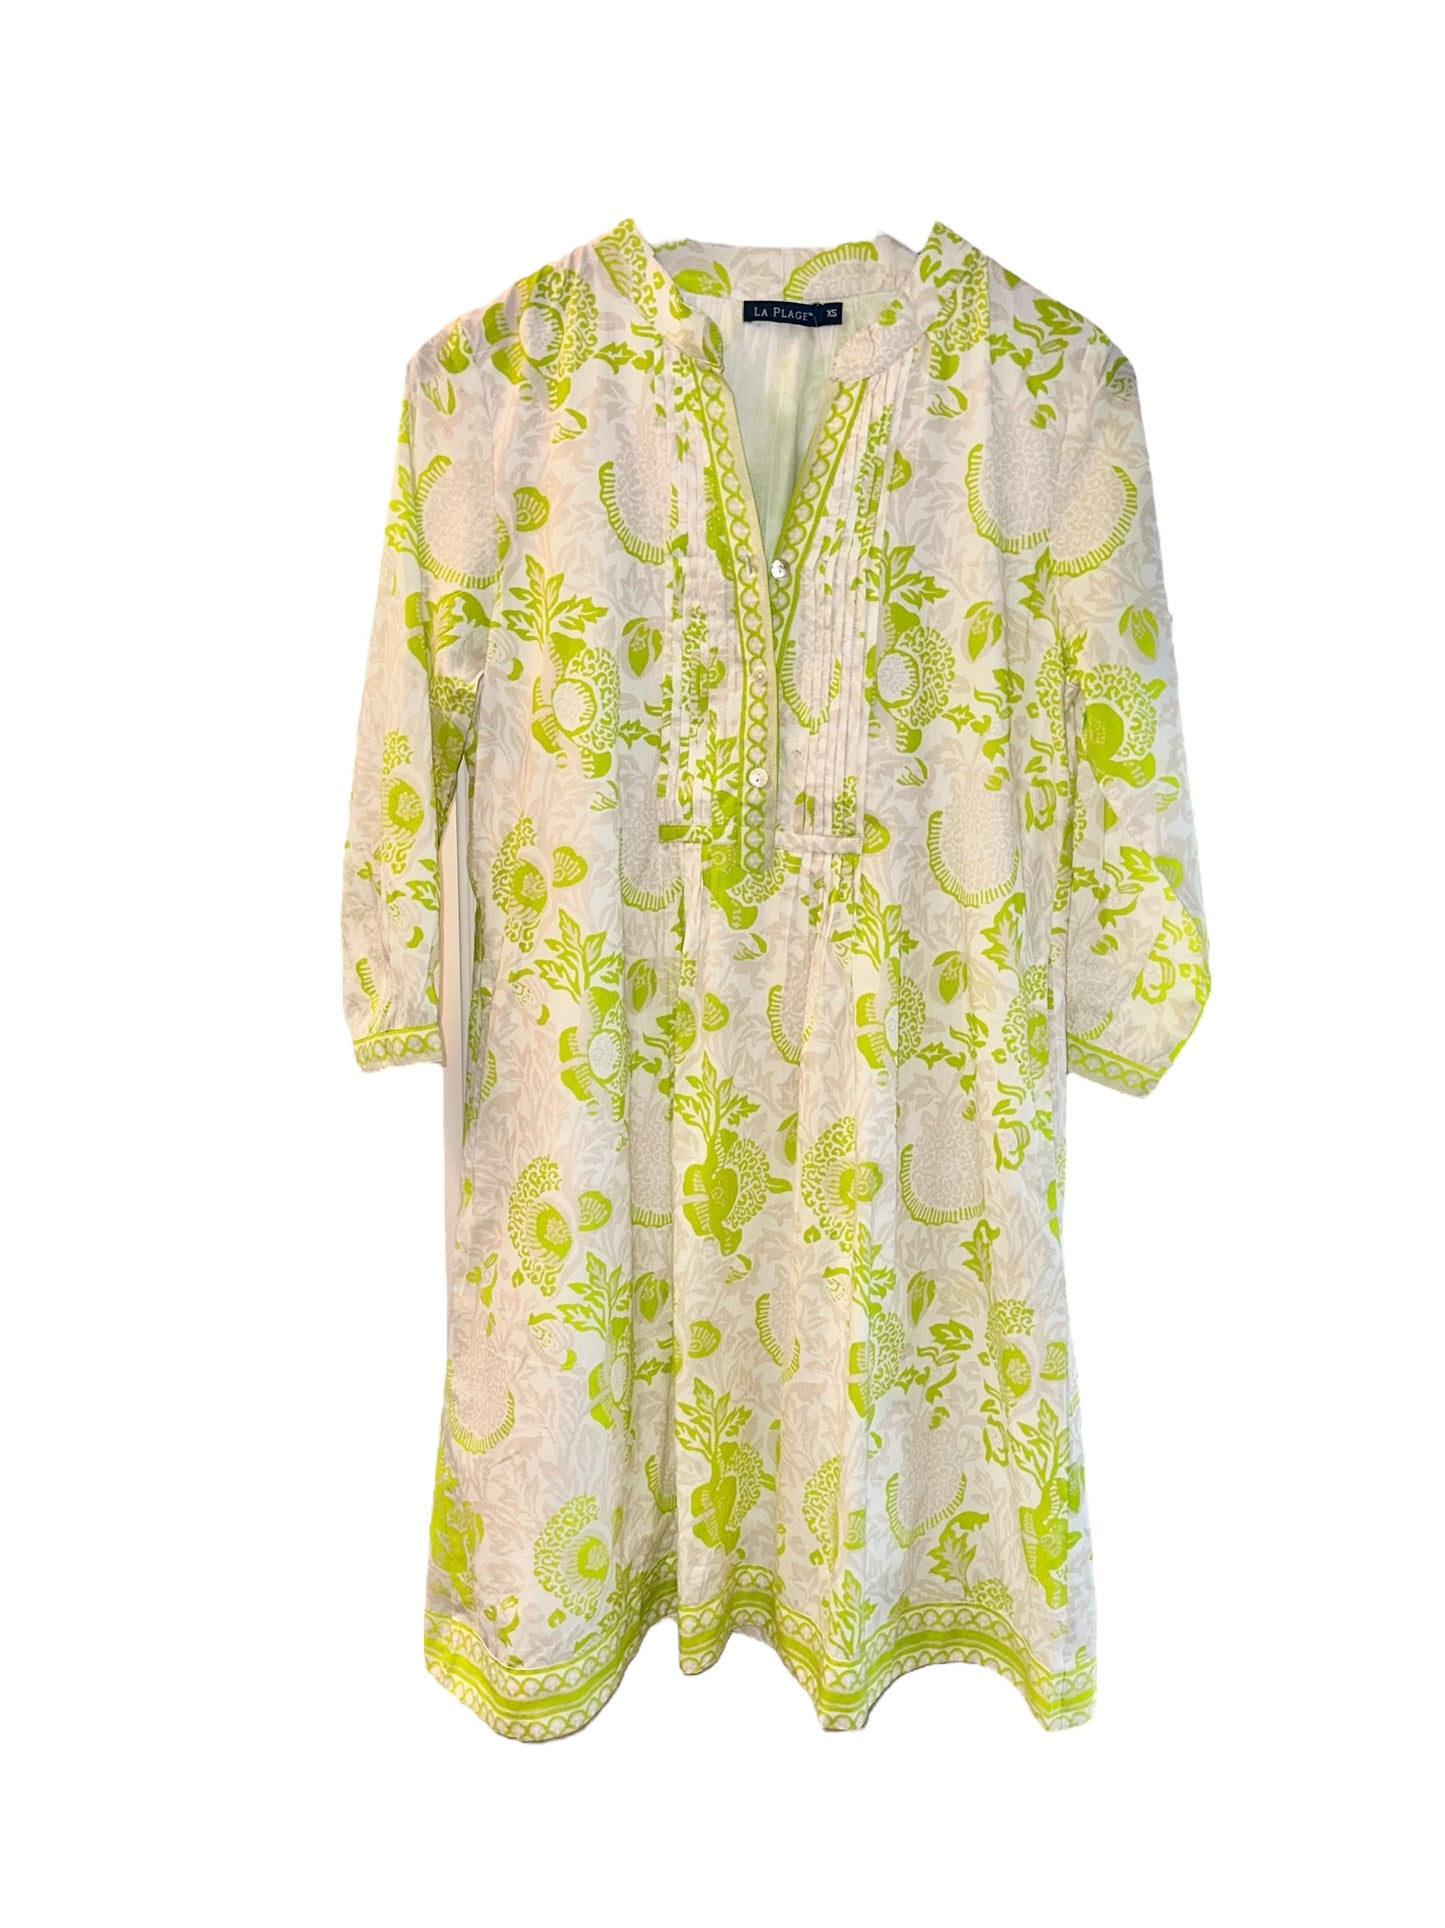 Maye Dress in floral block white/kiwi/bliss by LA Plage